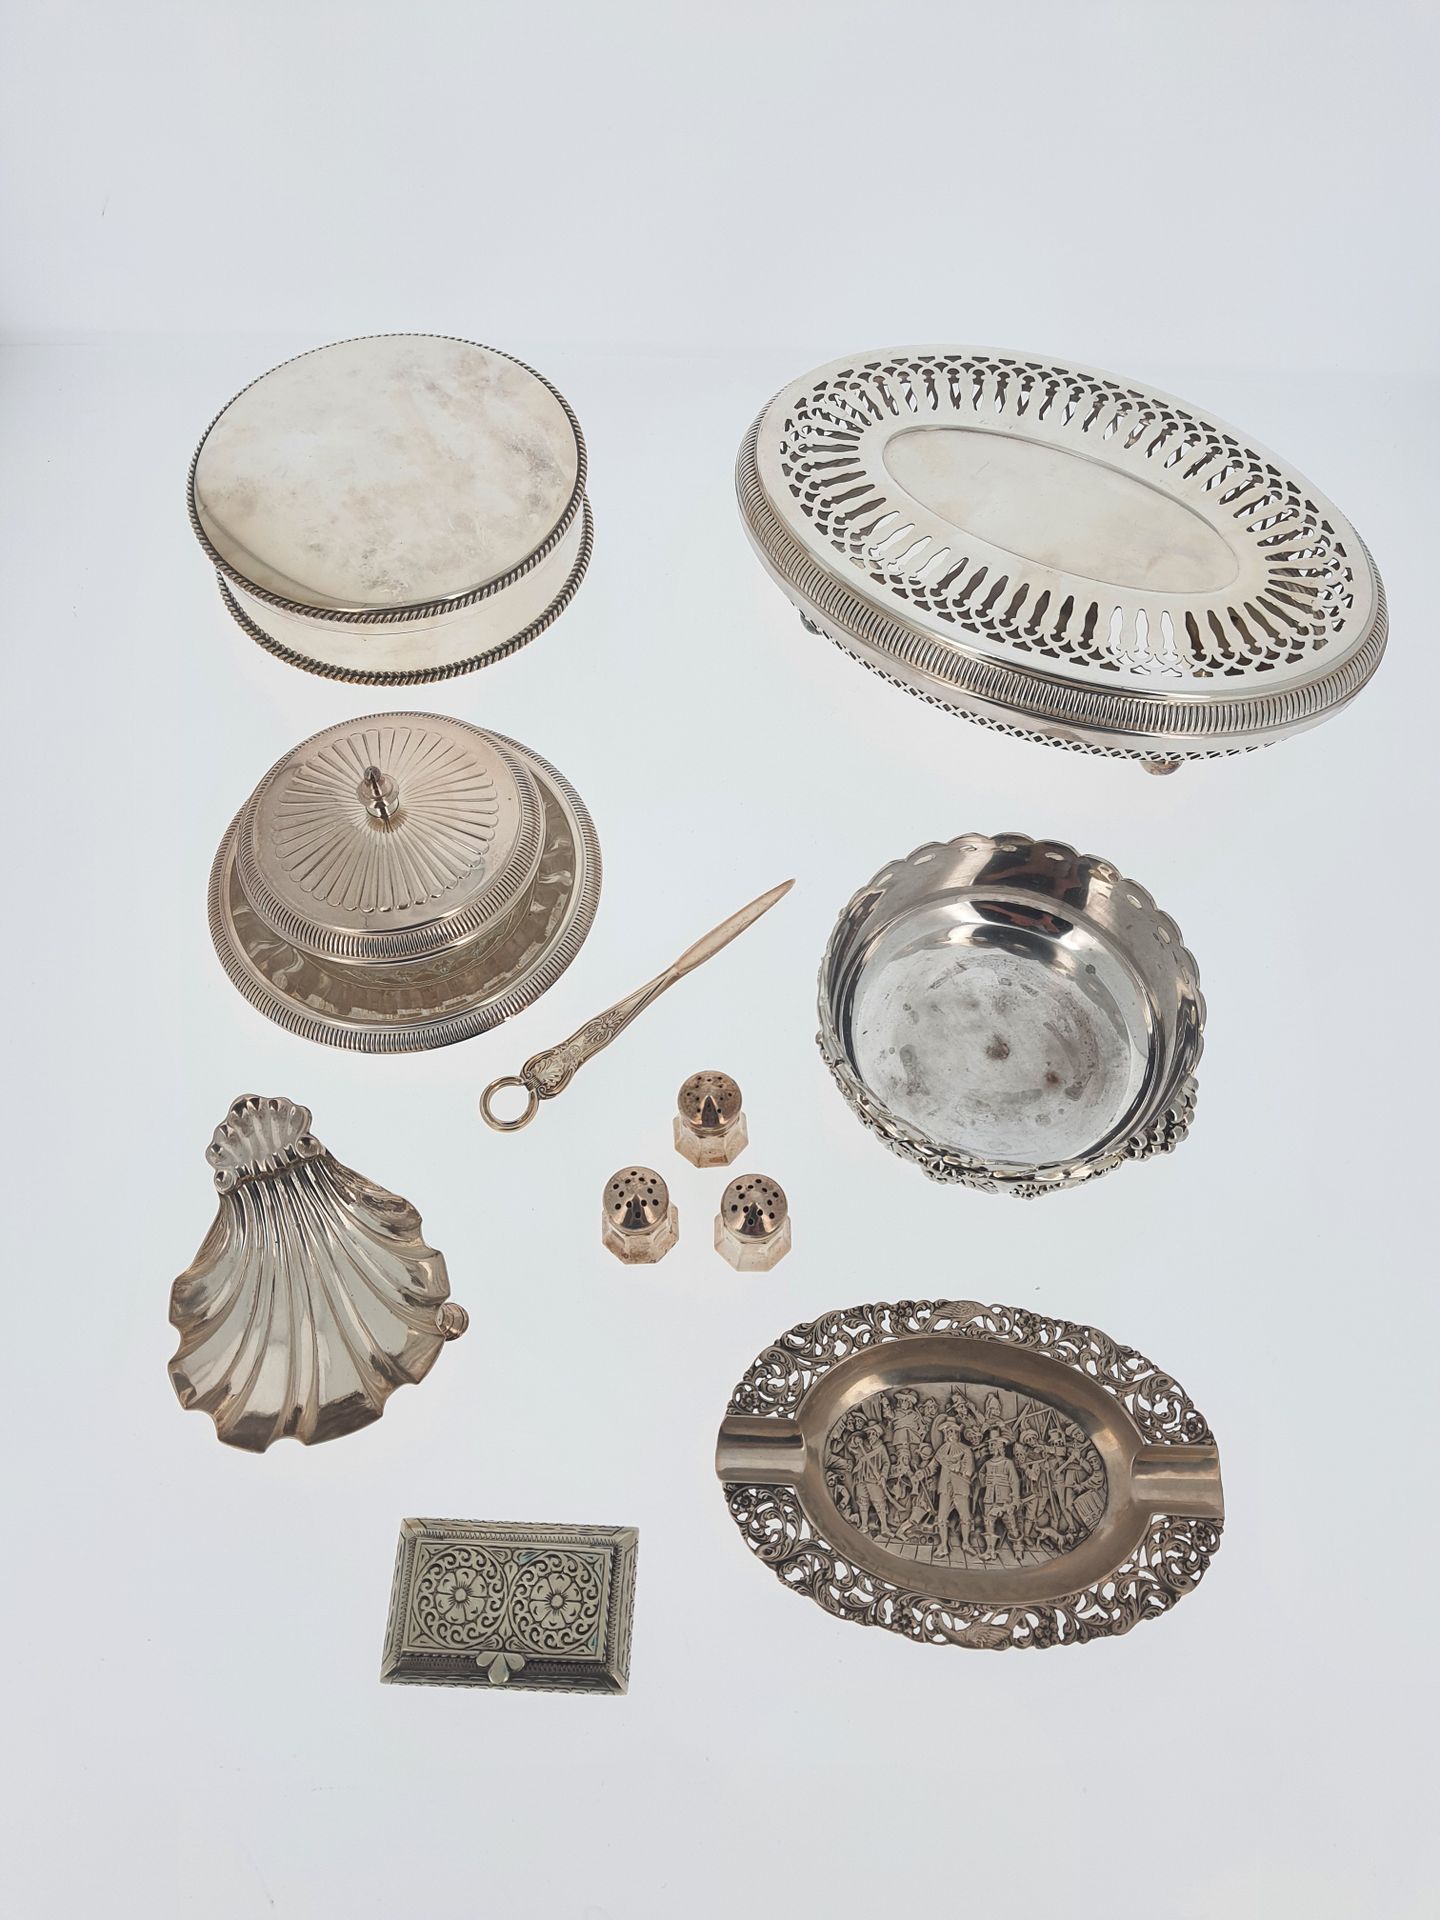 Null 重要的一批银色金属，包括:

炉子、口袋、盒子、篮子、烛台等 ...